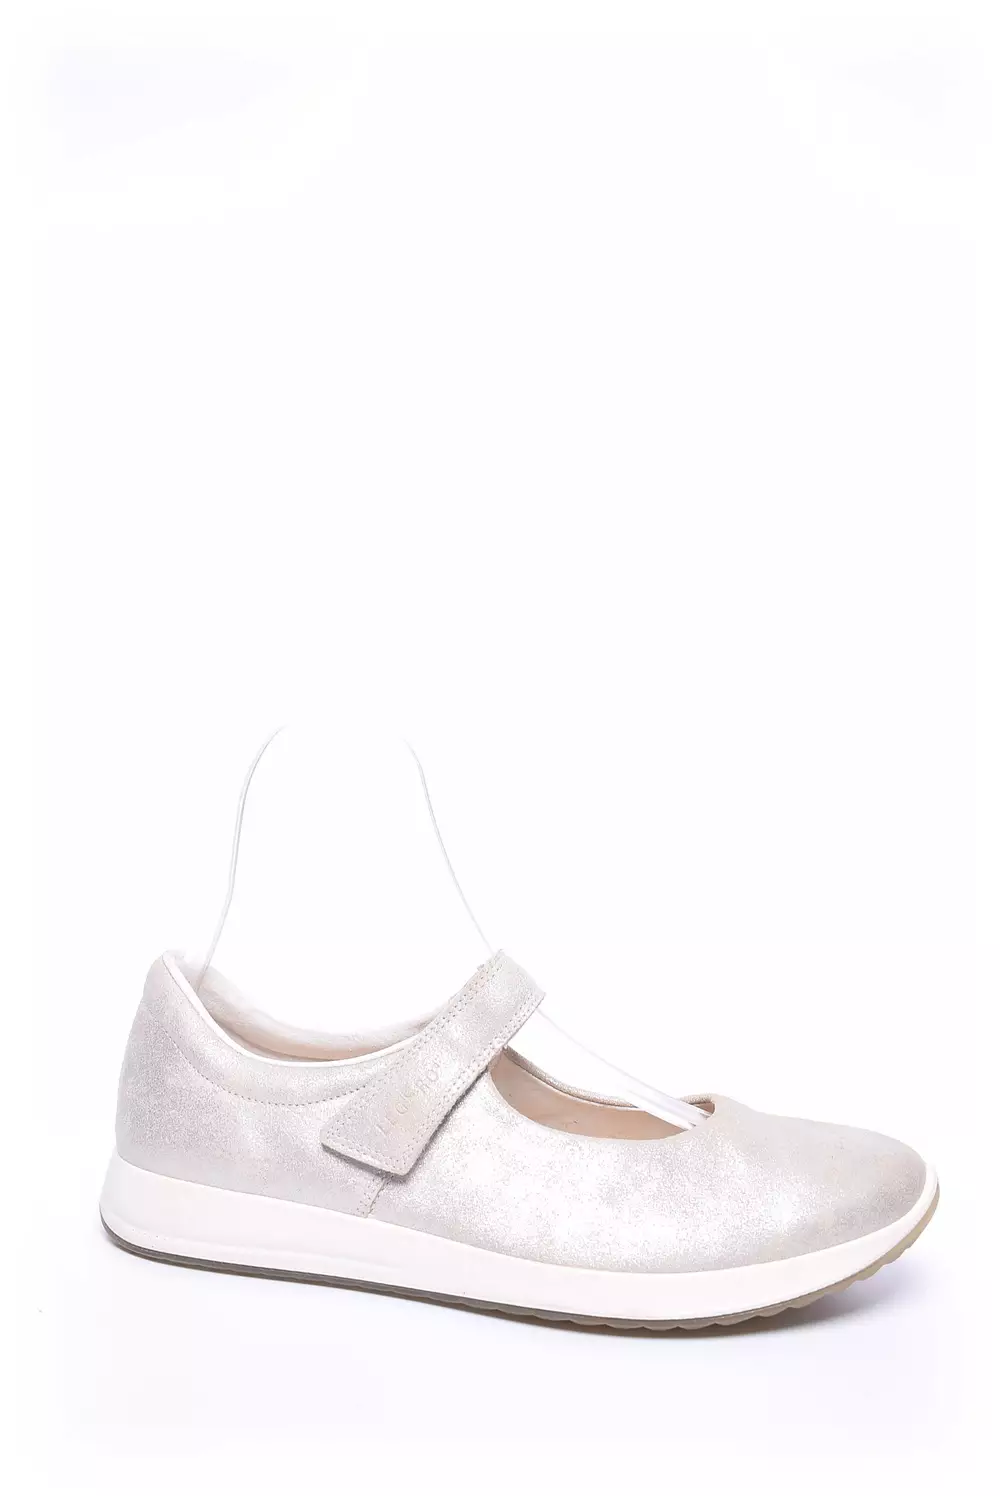 Leap closet elite Pantofi dama - Legero | Shoemix.ro